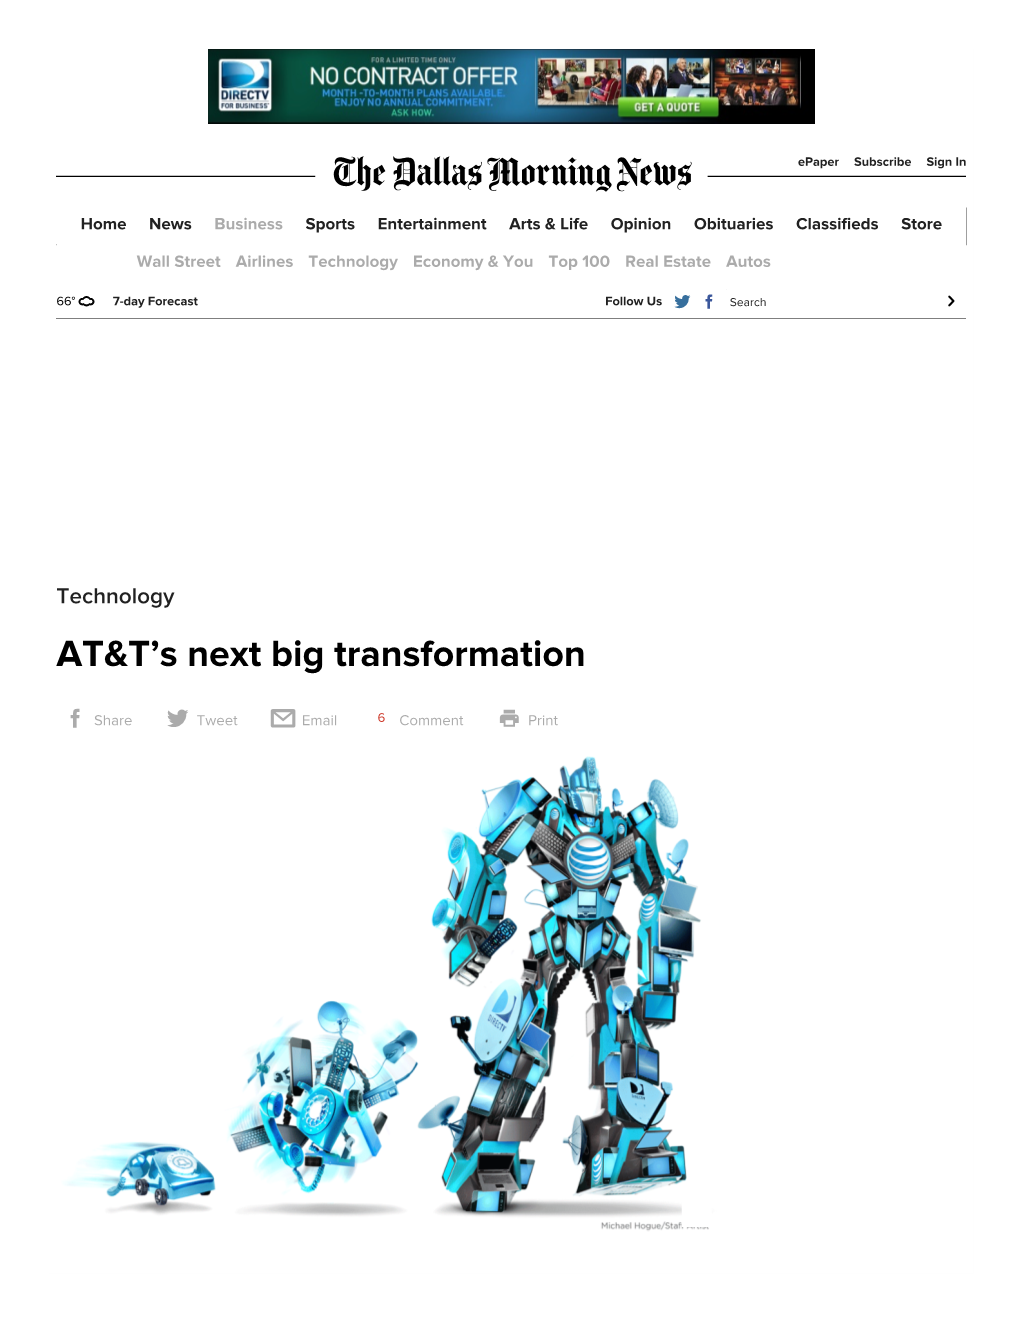 AT&T's Next Big Transformation